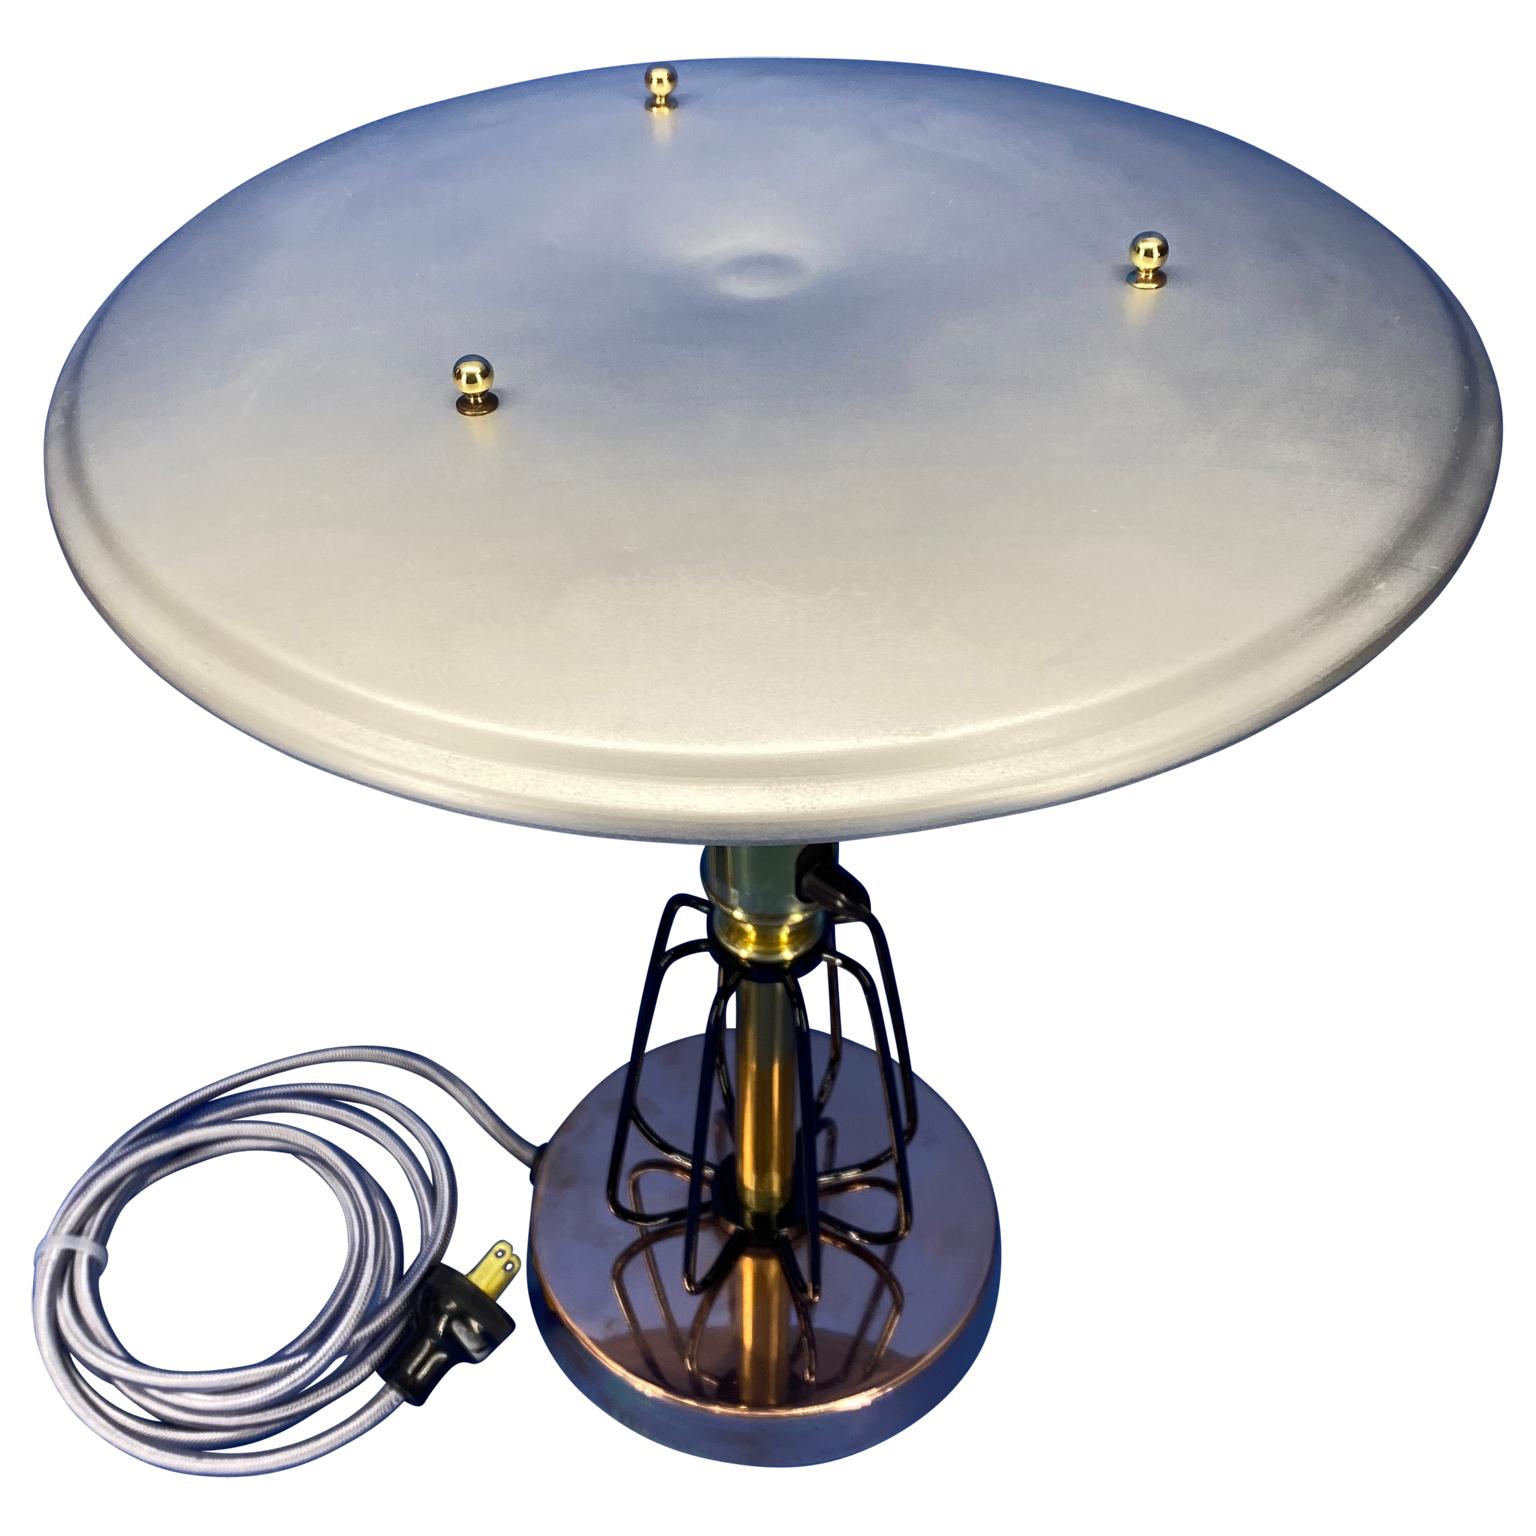 North American American Mid-Century Modern Brass and Chrome Desk Lamp